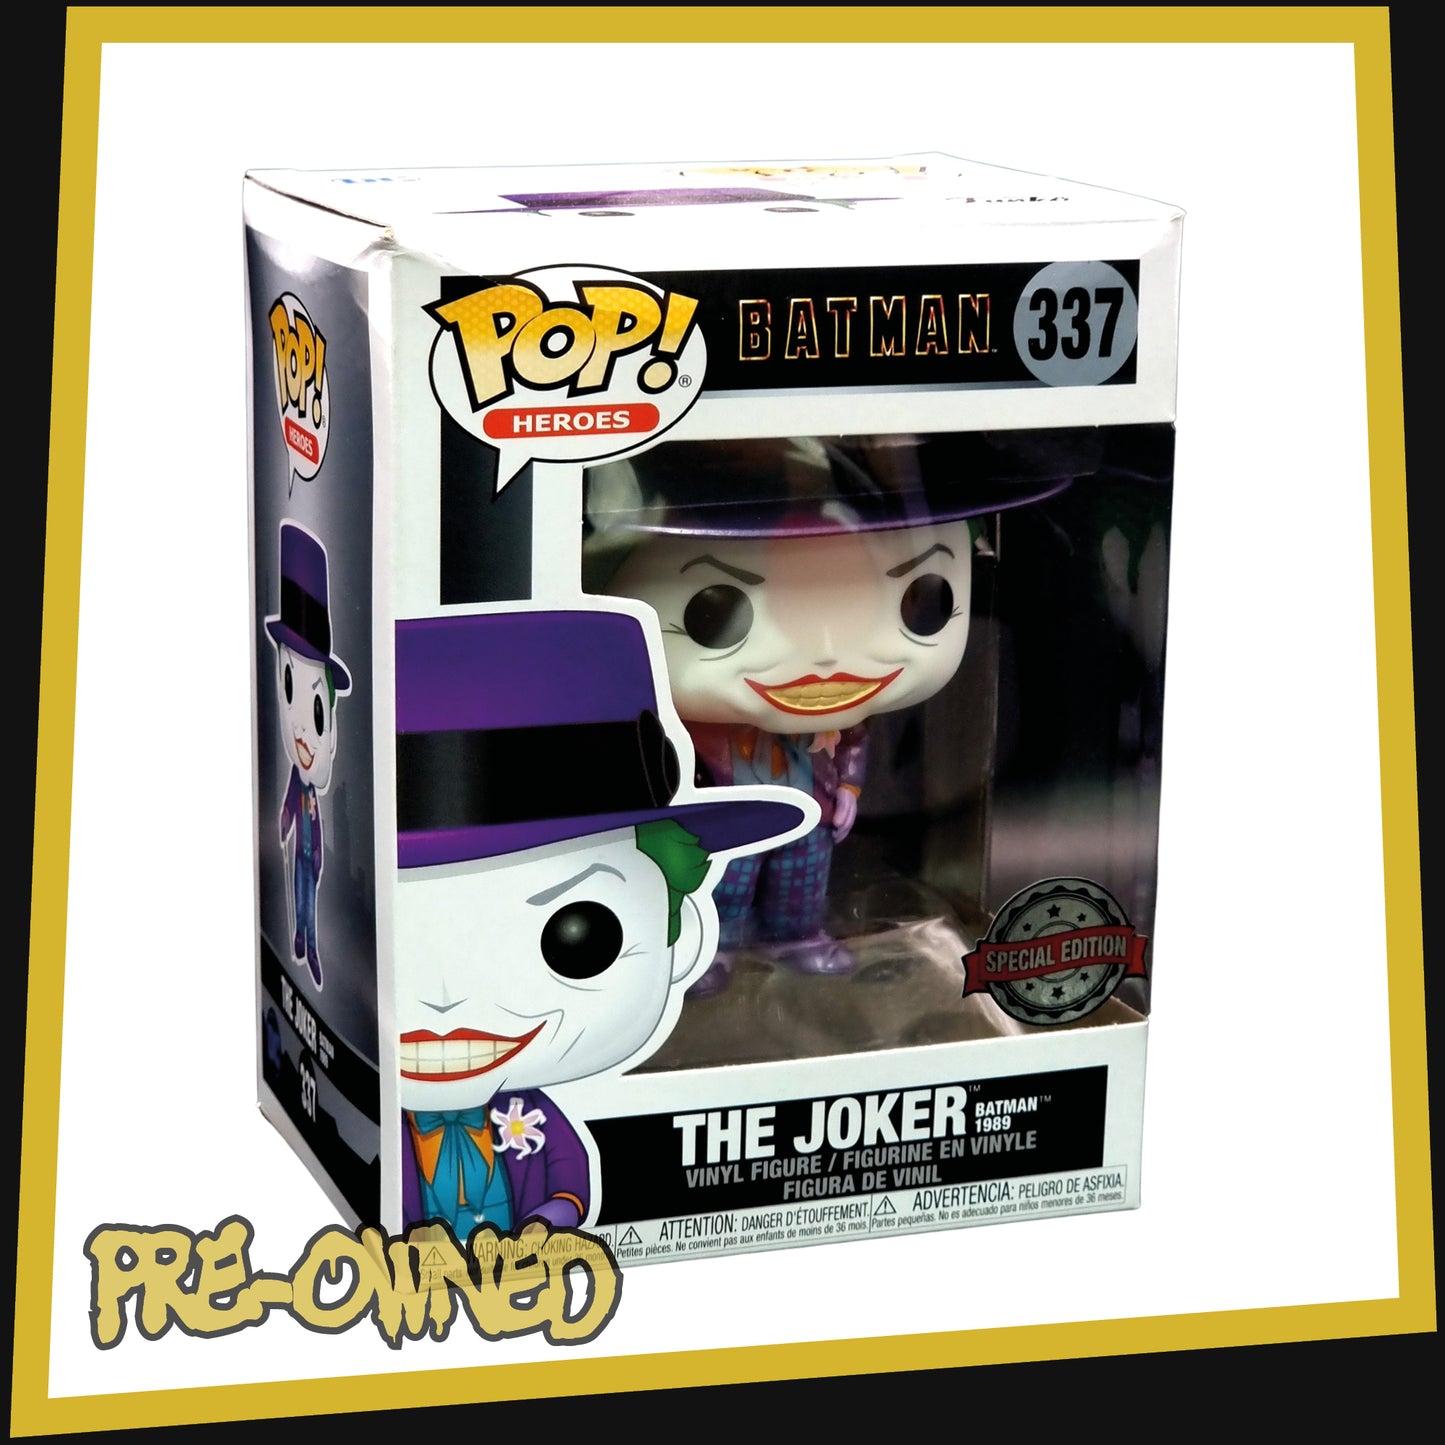 The Joker -Batman 1989 Metallic Special Edition #337 Funko POP! Heroes 3.75"